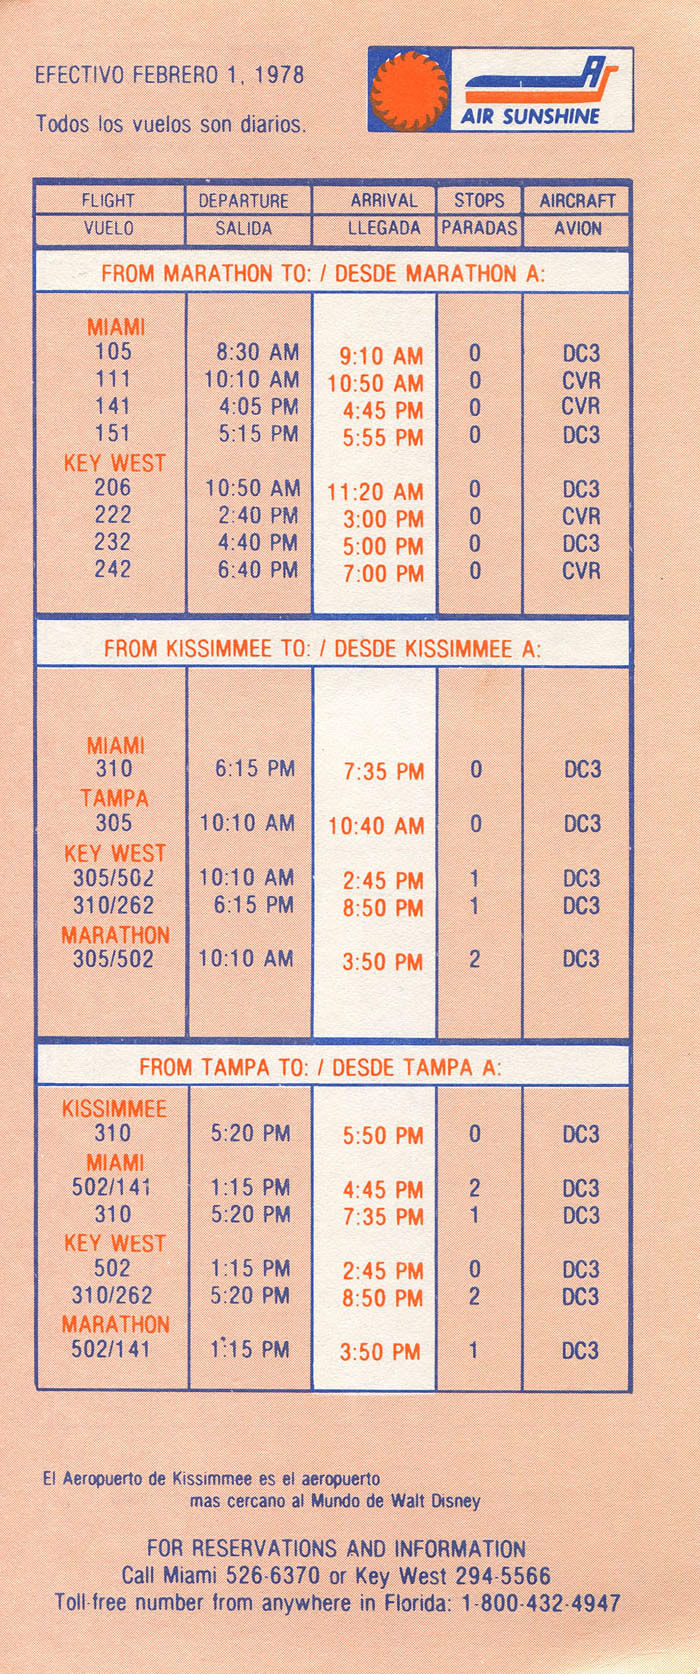 Air Sunshine timetable 1978